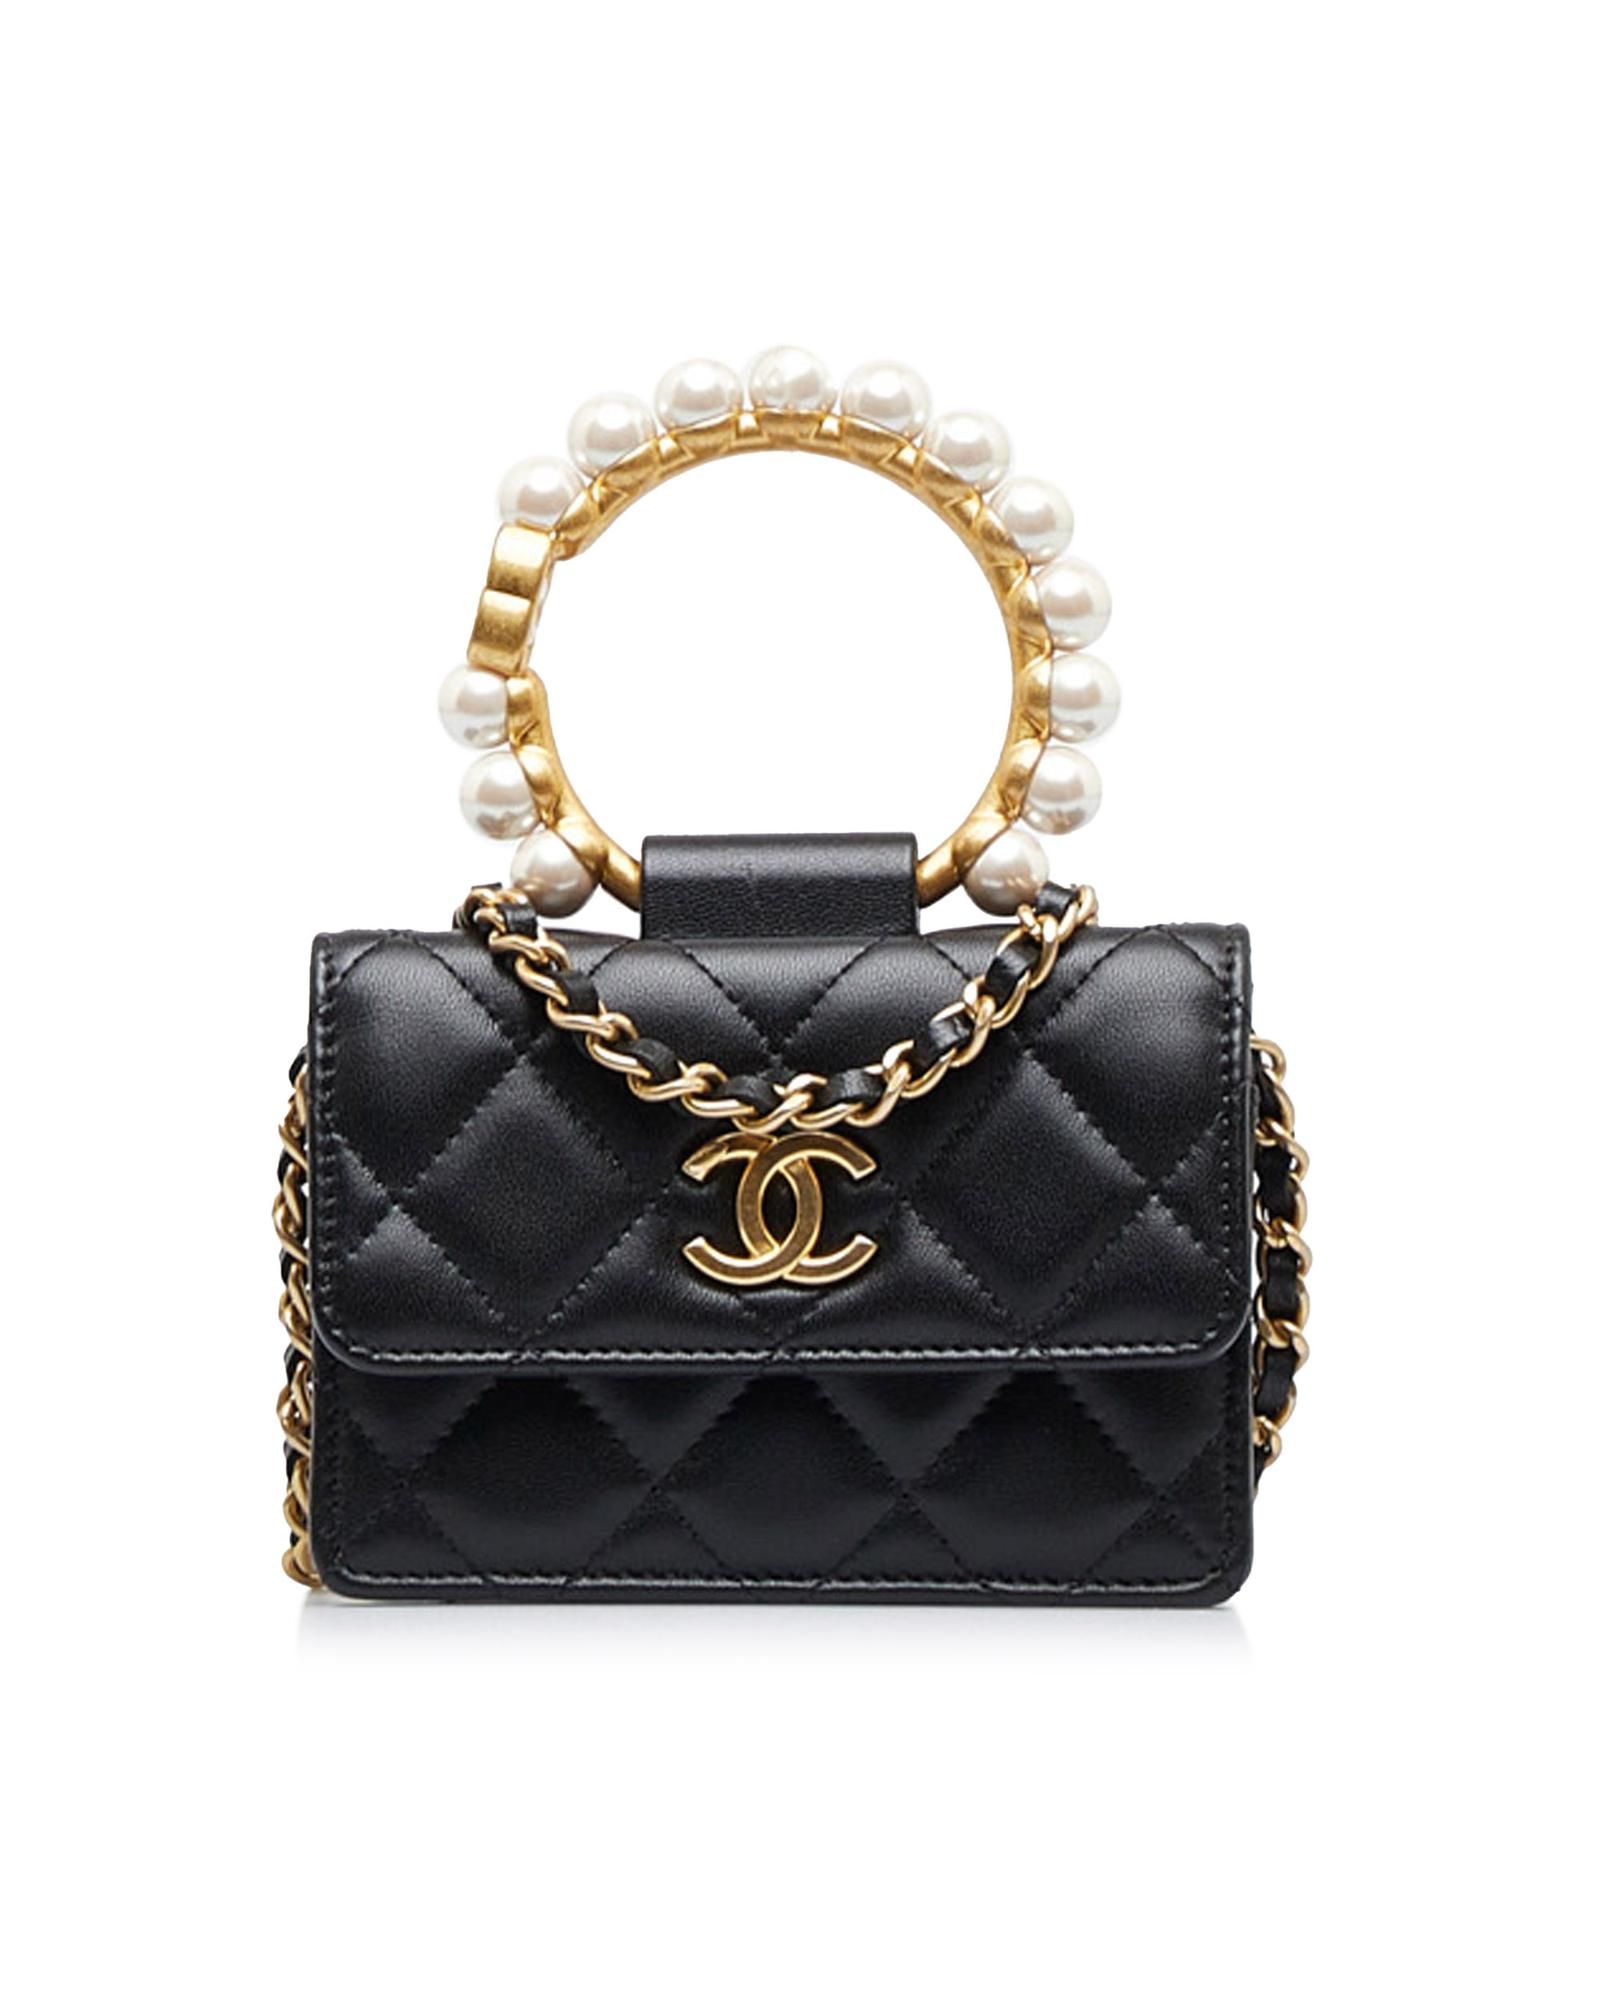 Shop Chanel Circle Bag on Pinterest